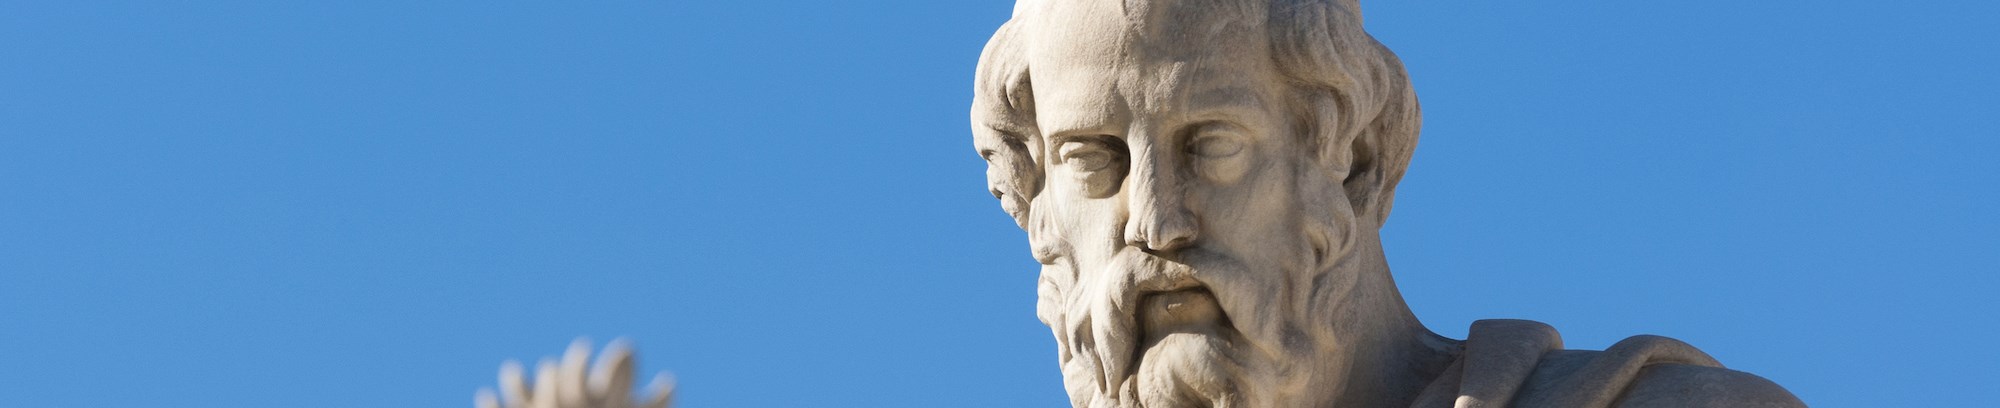 Platon filosofikursus FOF Køge Bugt